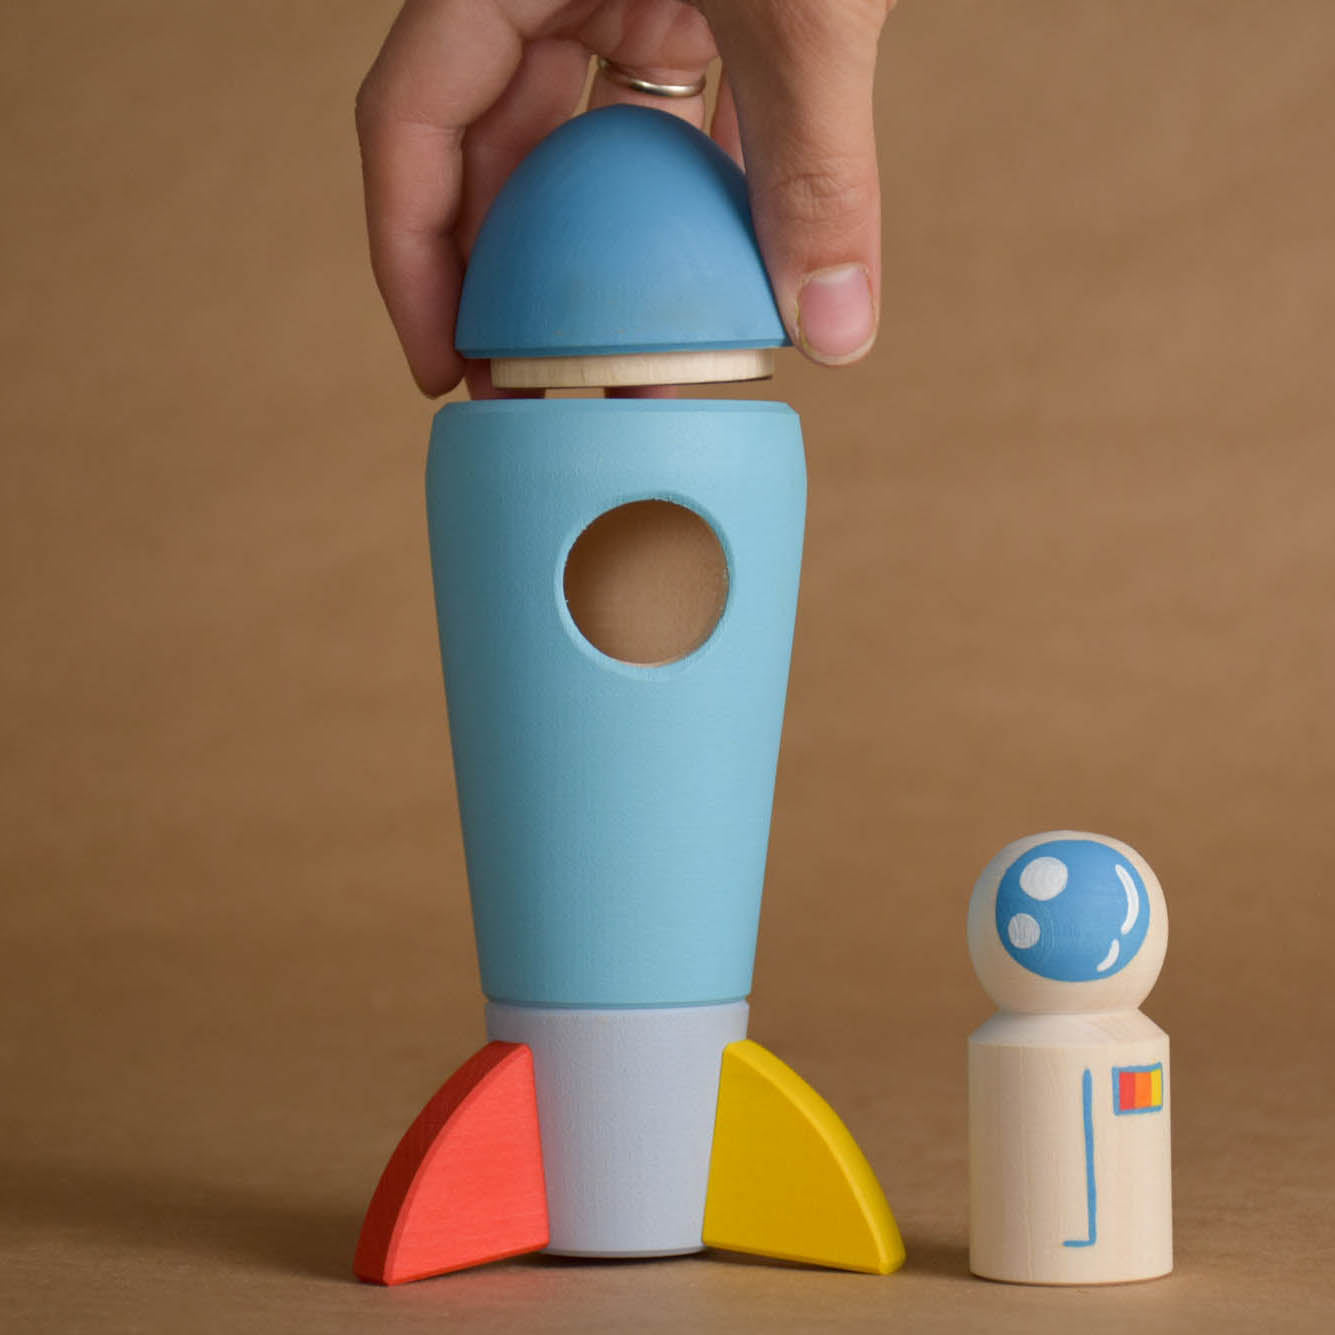 Wooden Rocket Toy Astronaut